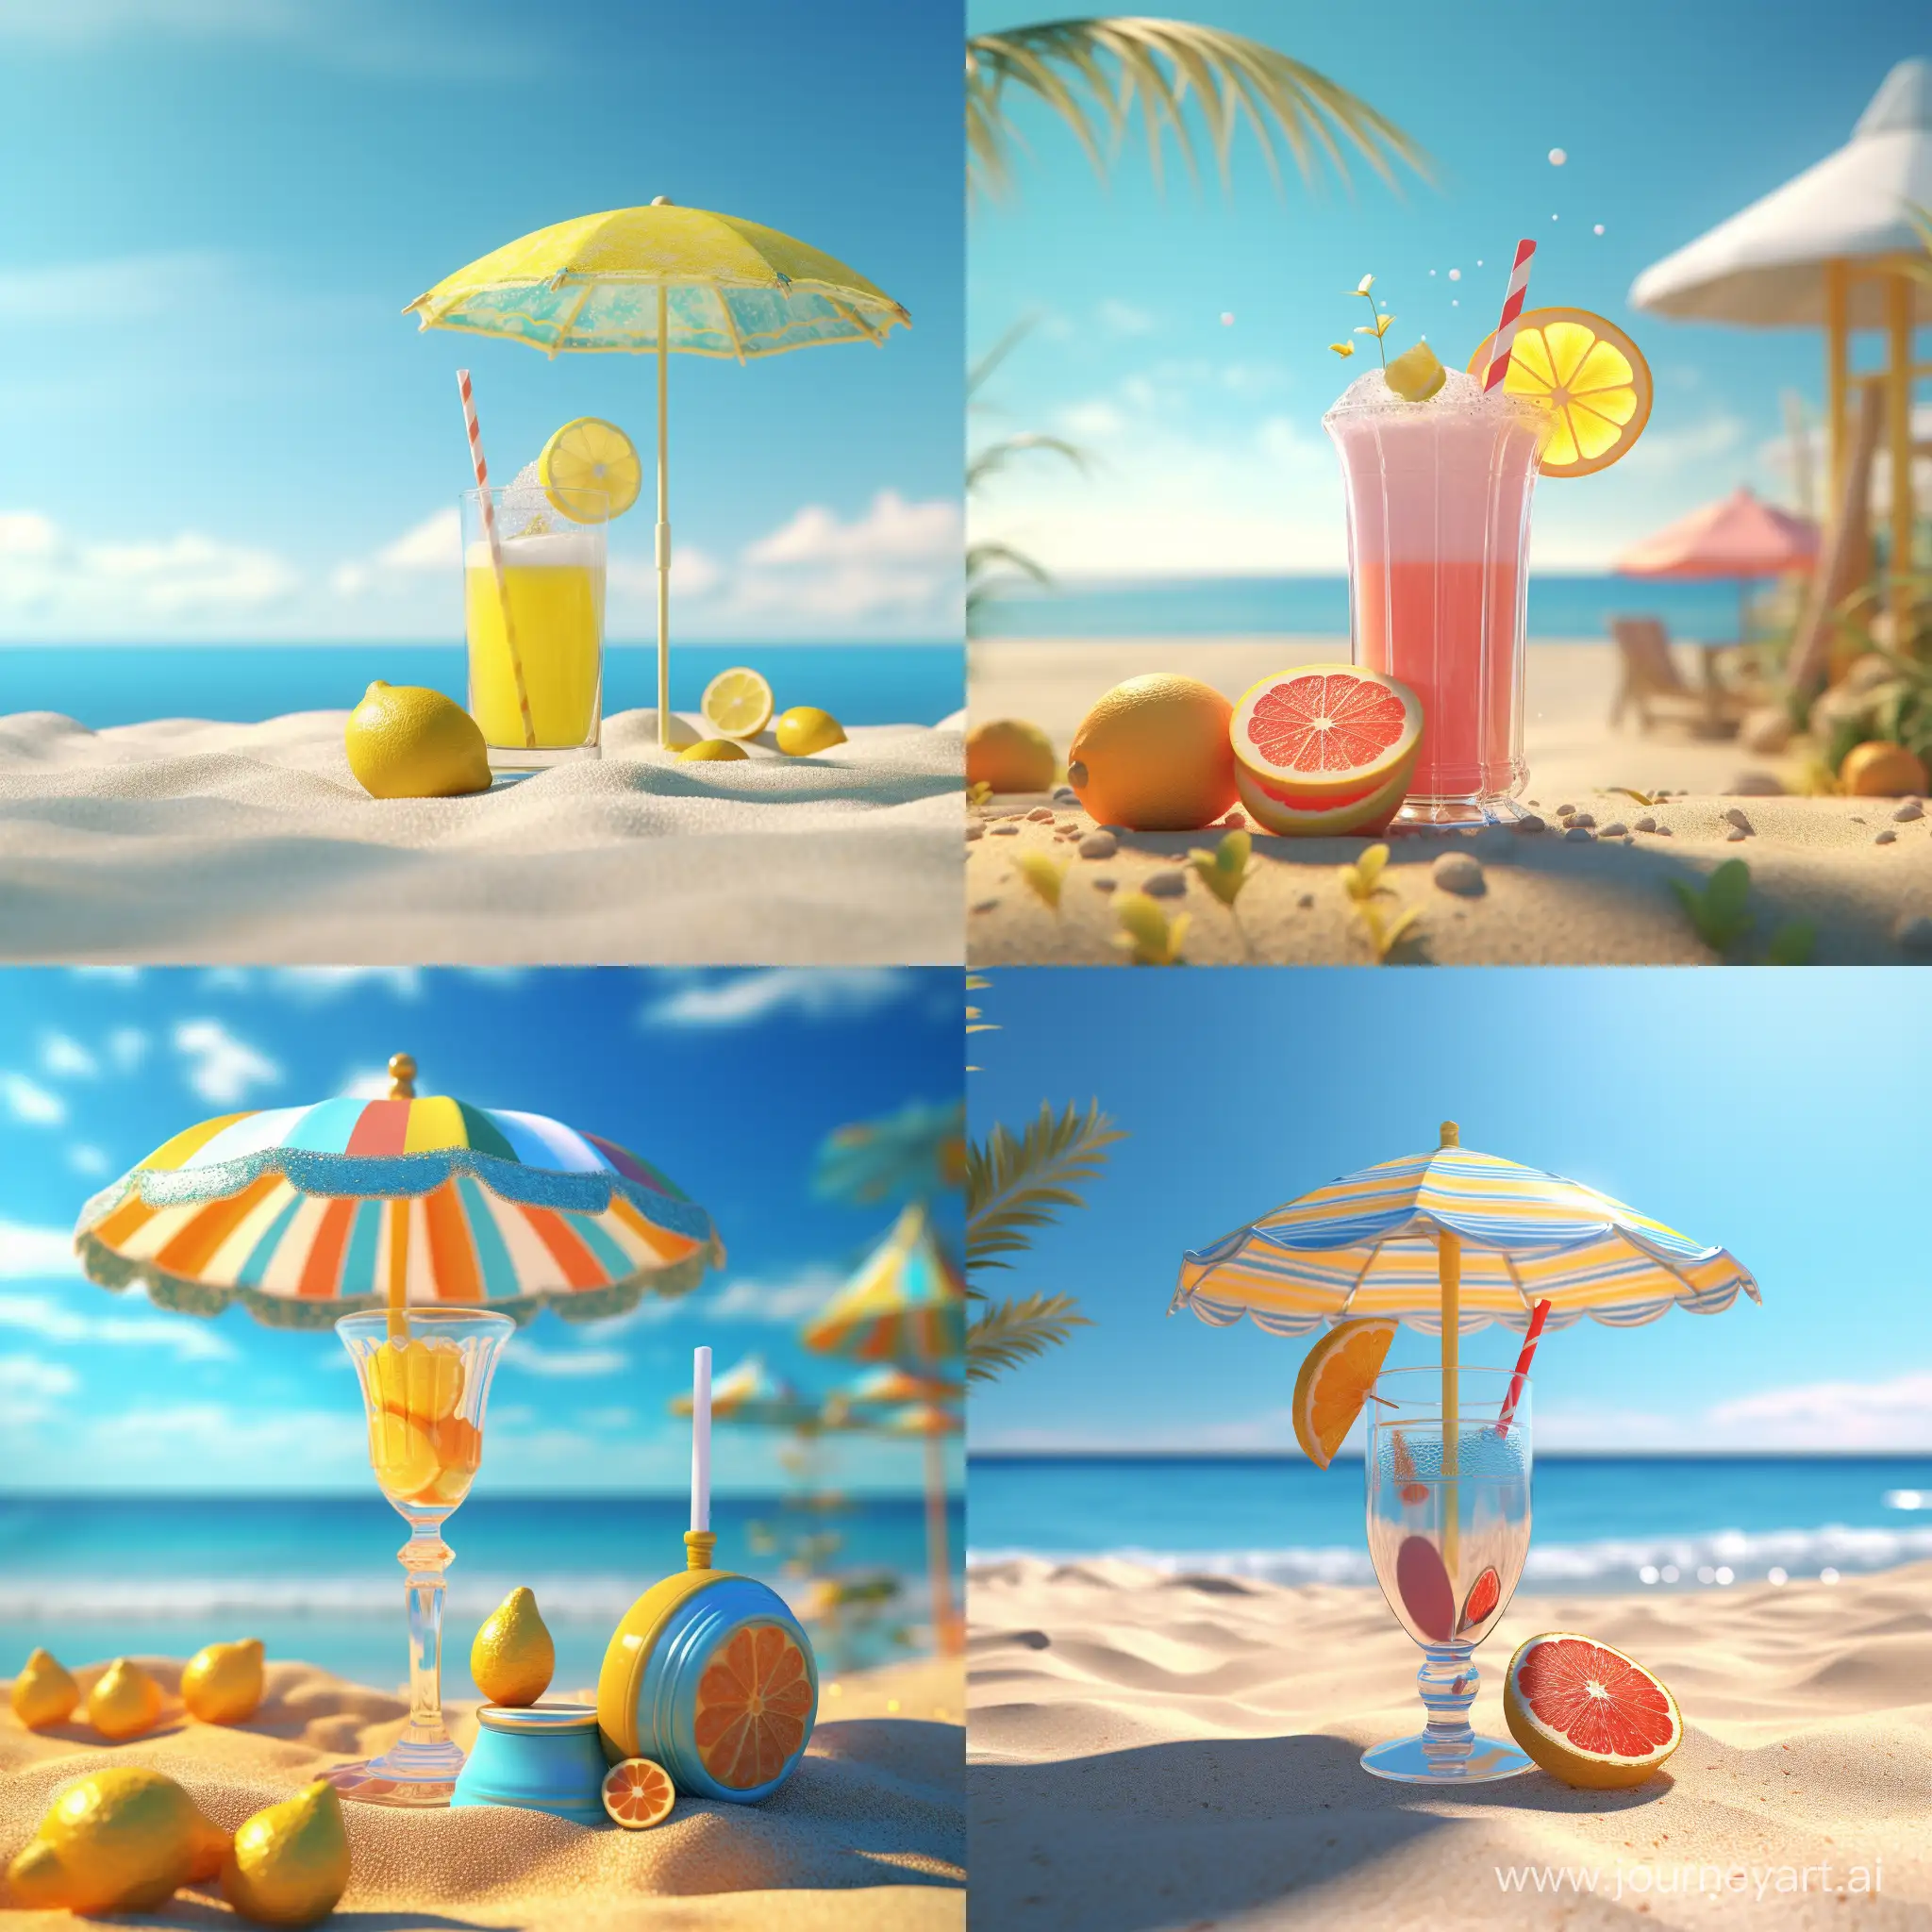 Refreshing-Lemonade-Glass-with-Umbrella-on-Sunny-Beach